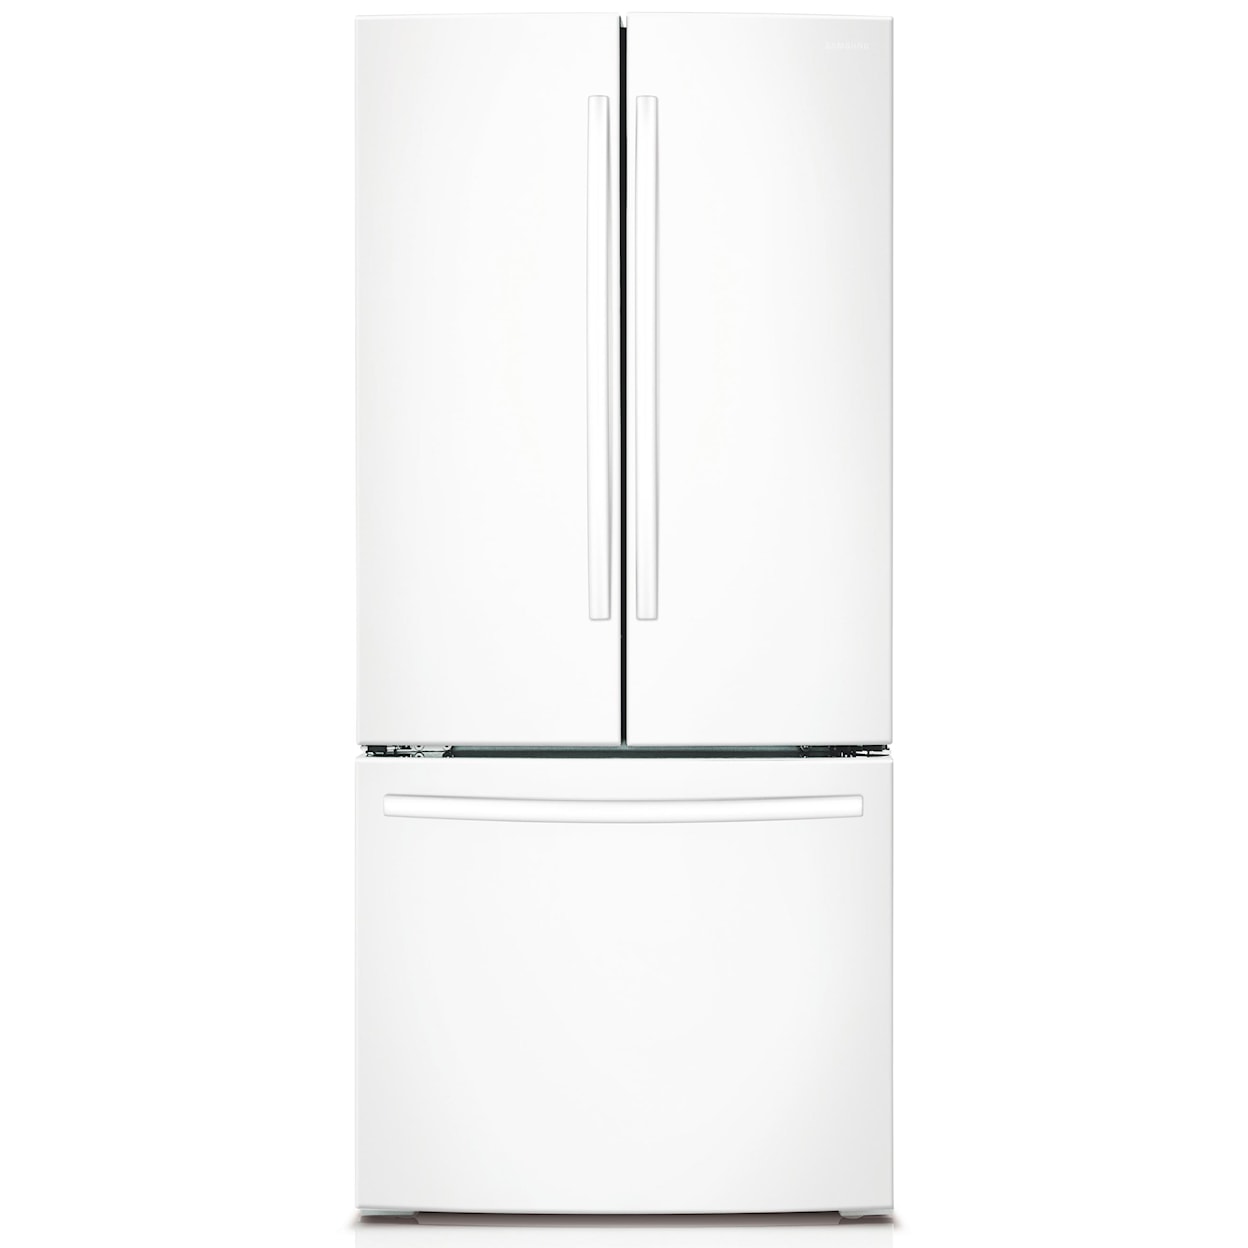 Samsung Appliances French Door Refrigerators 21.6 Cu. Ft. French Door Refrigerator